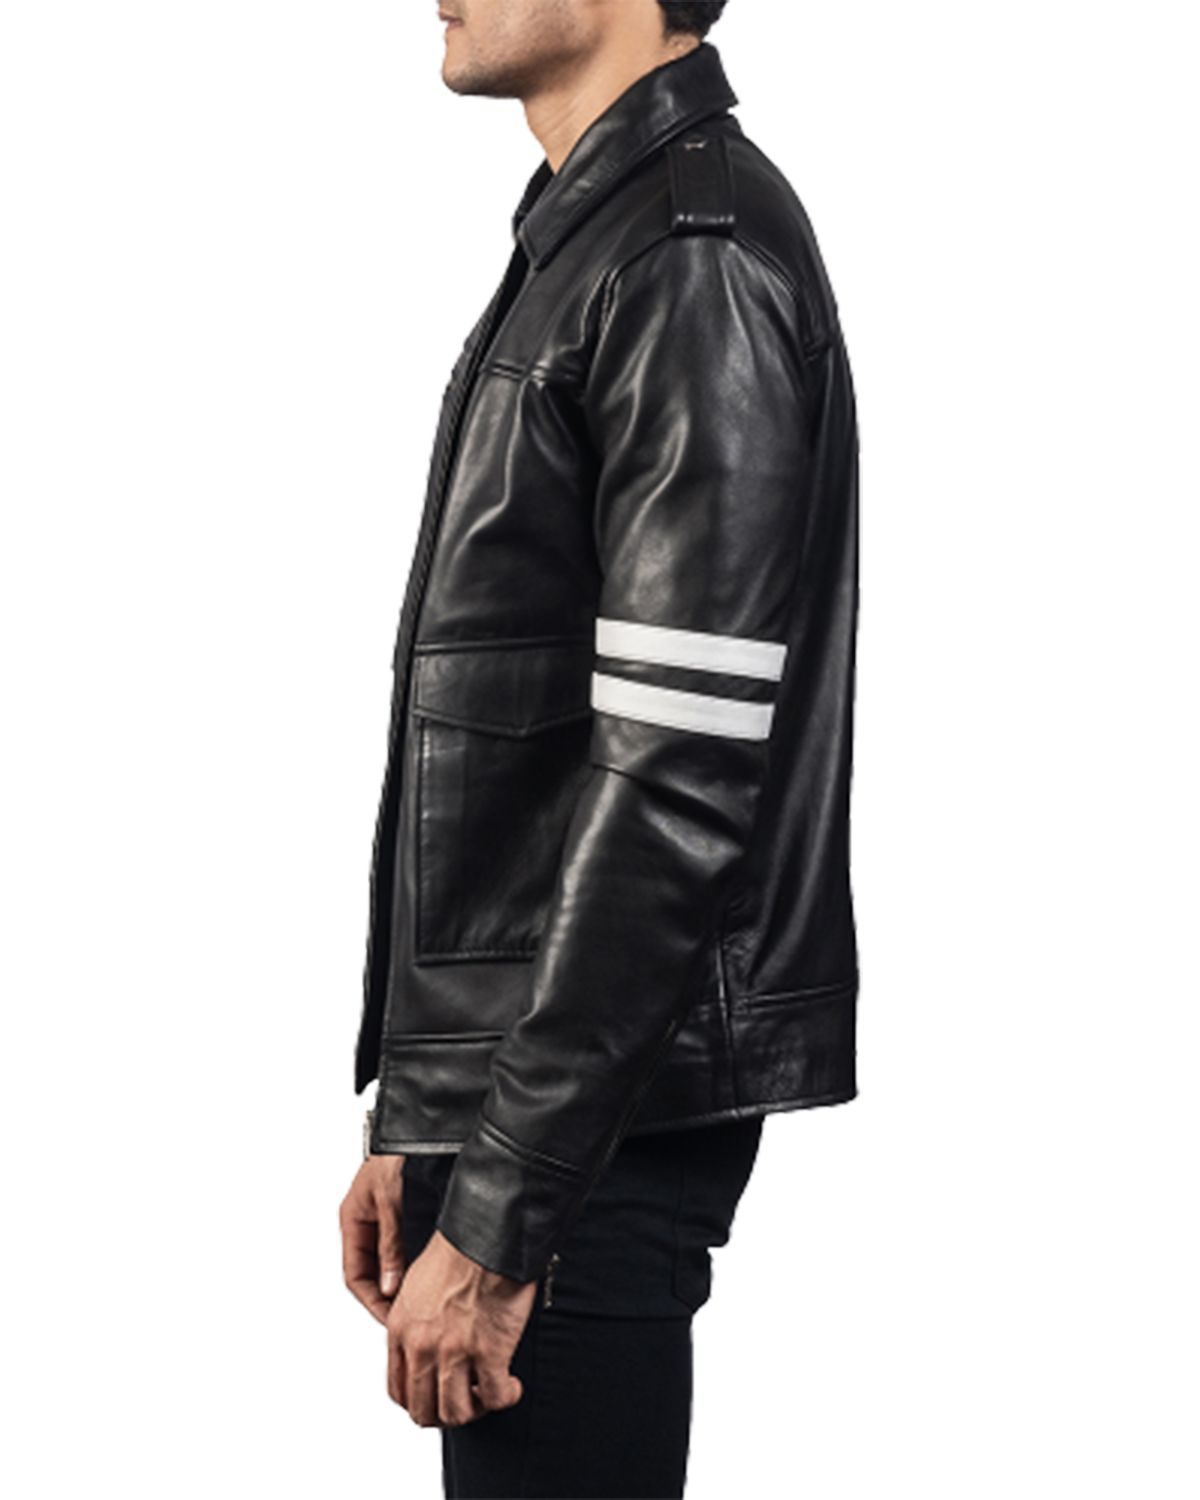 Elite Men's Black Biker With White Stripes Leather Jacket